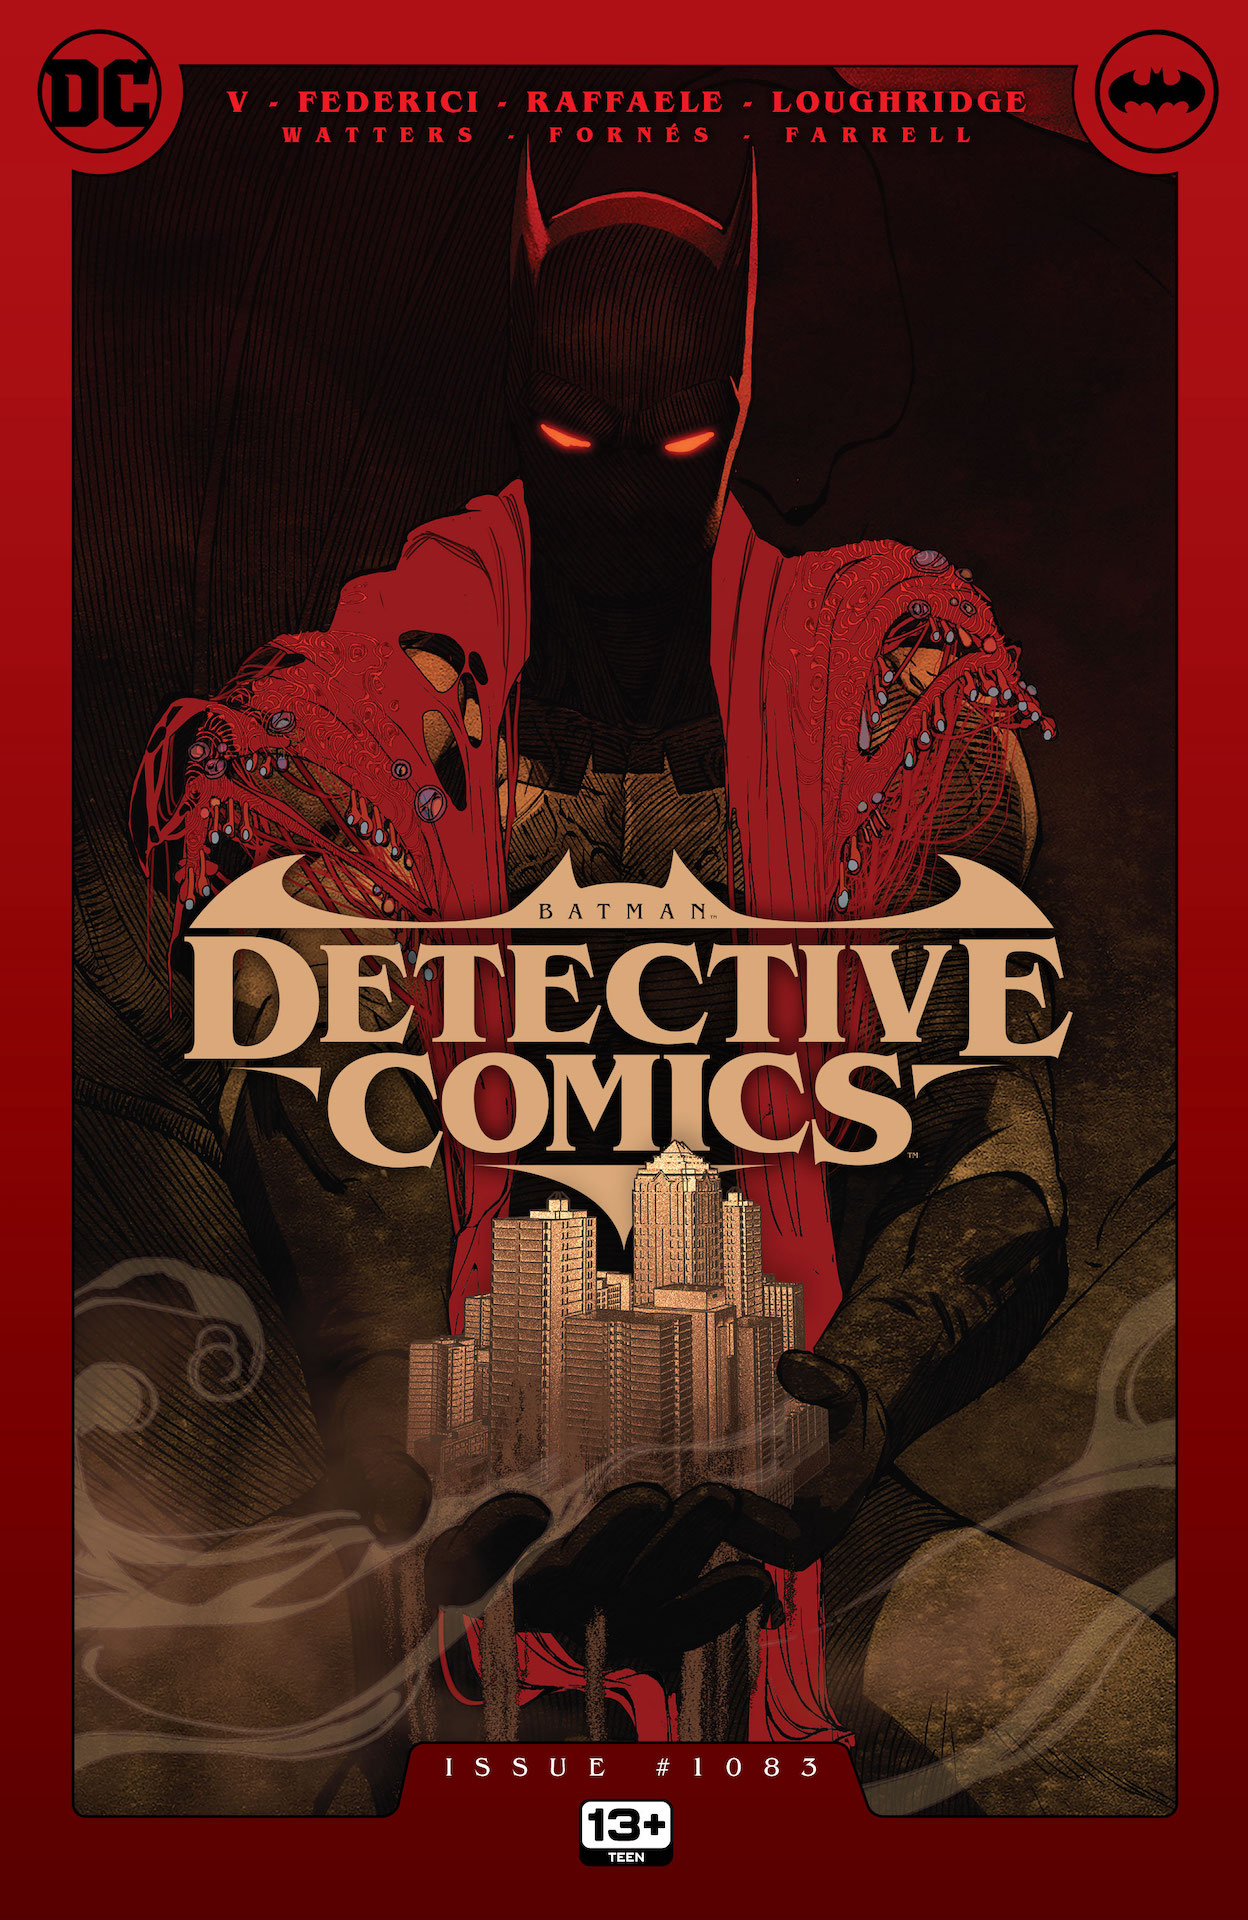 DC Preview: Detective Comics #1083